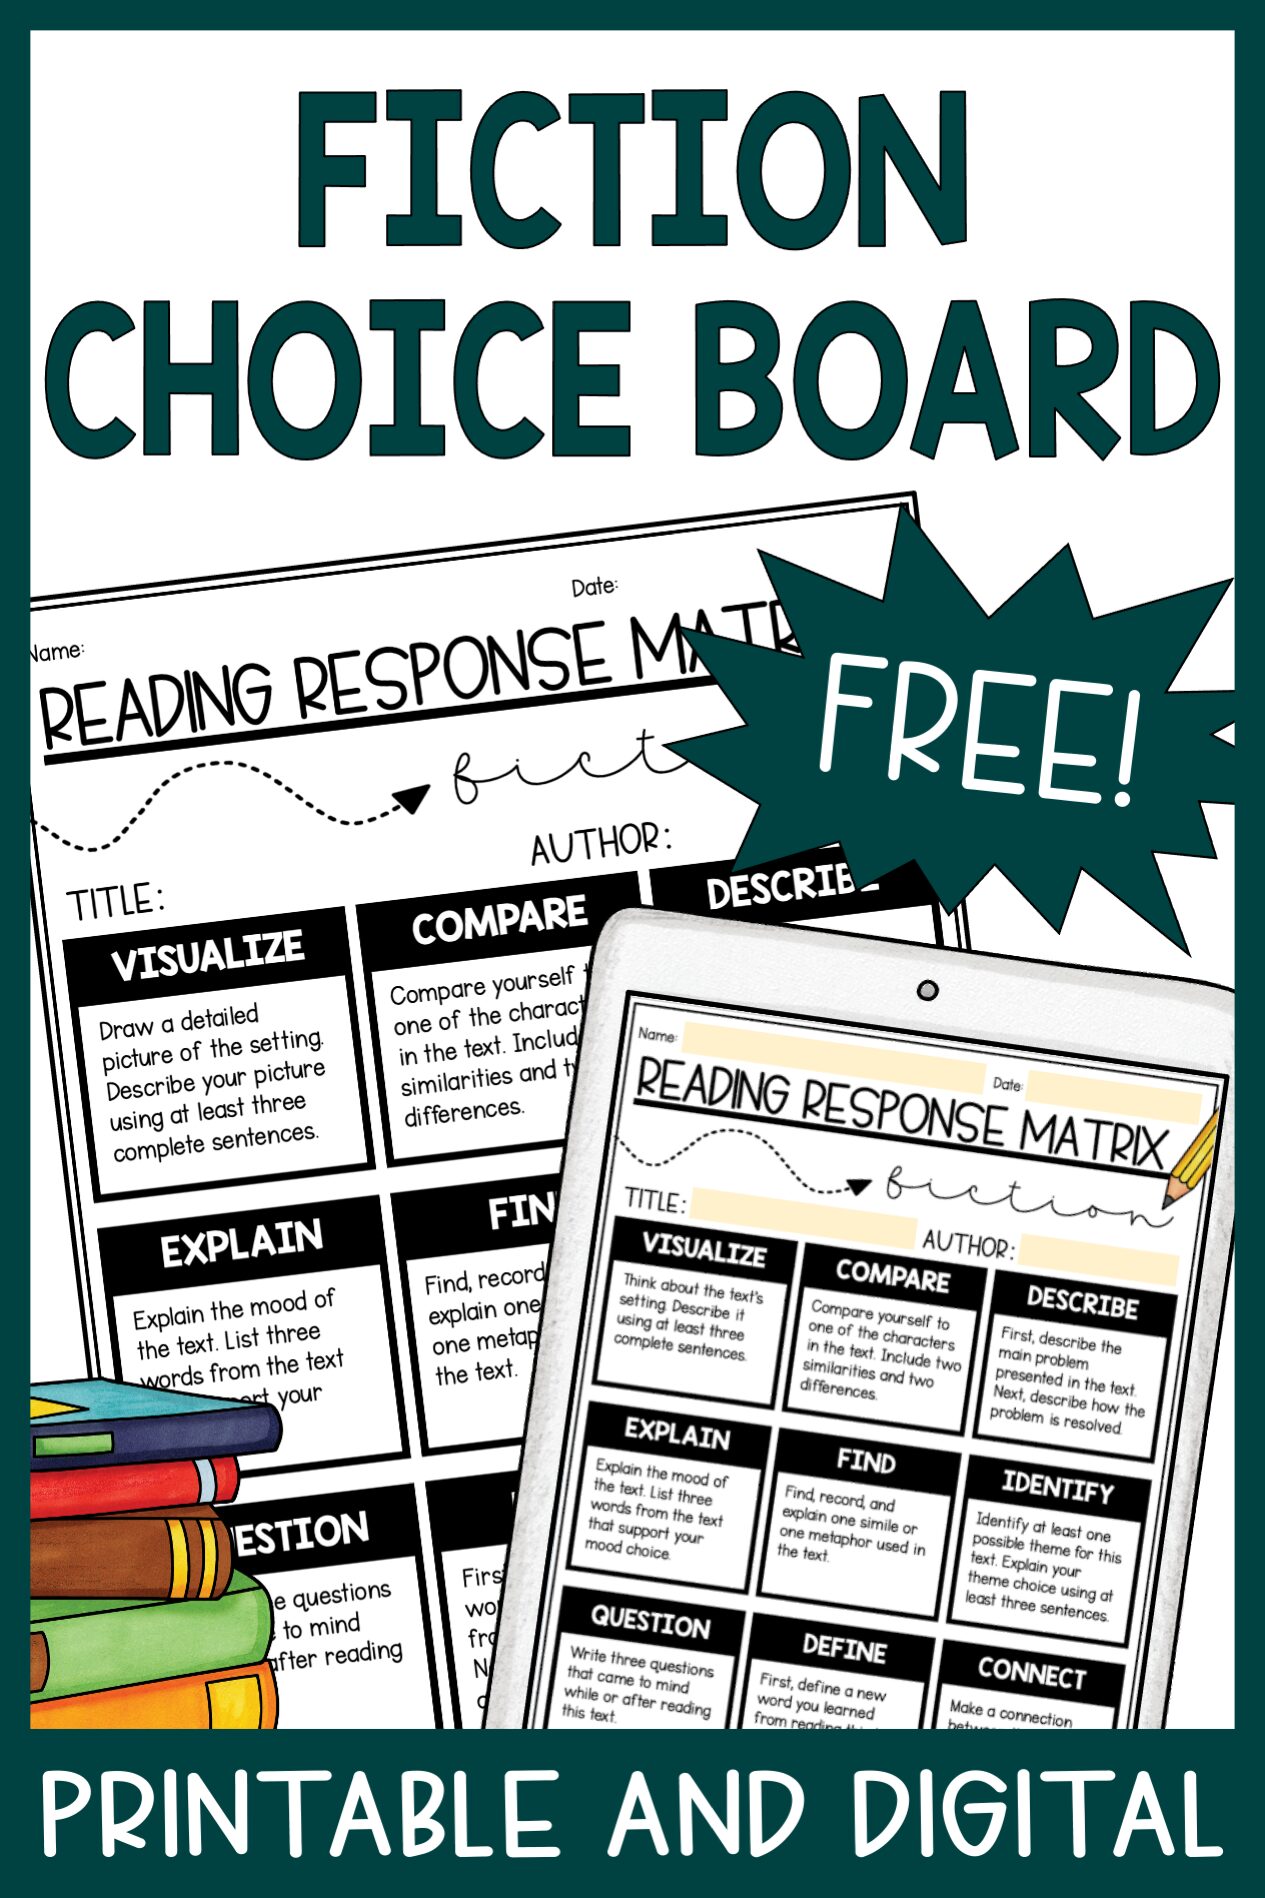 Free Fiction Choice Board for Teachers